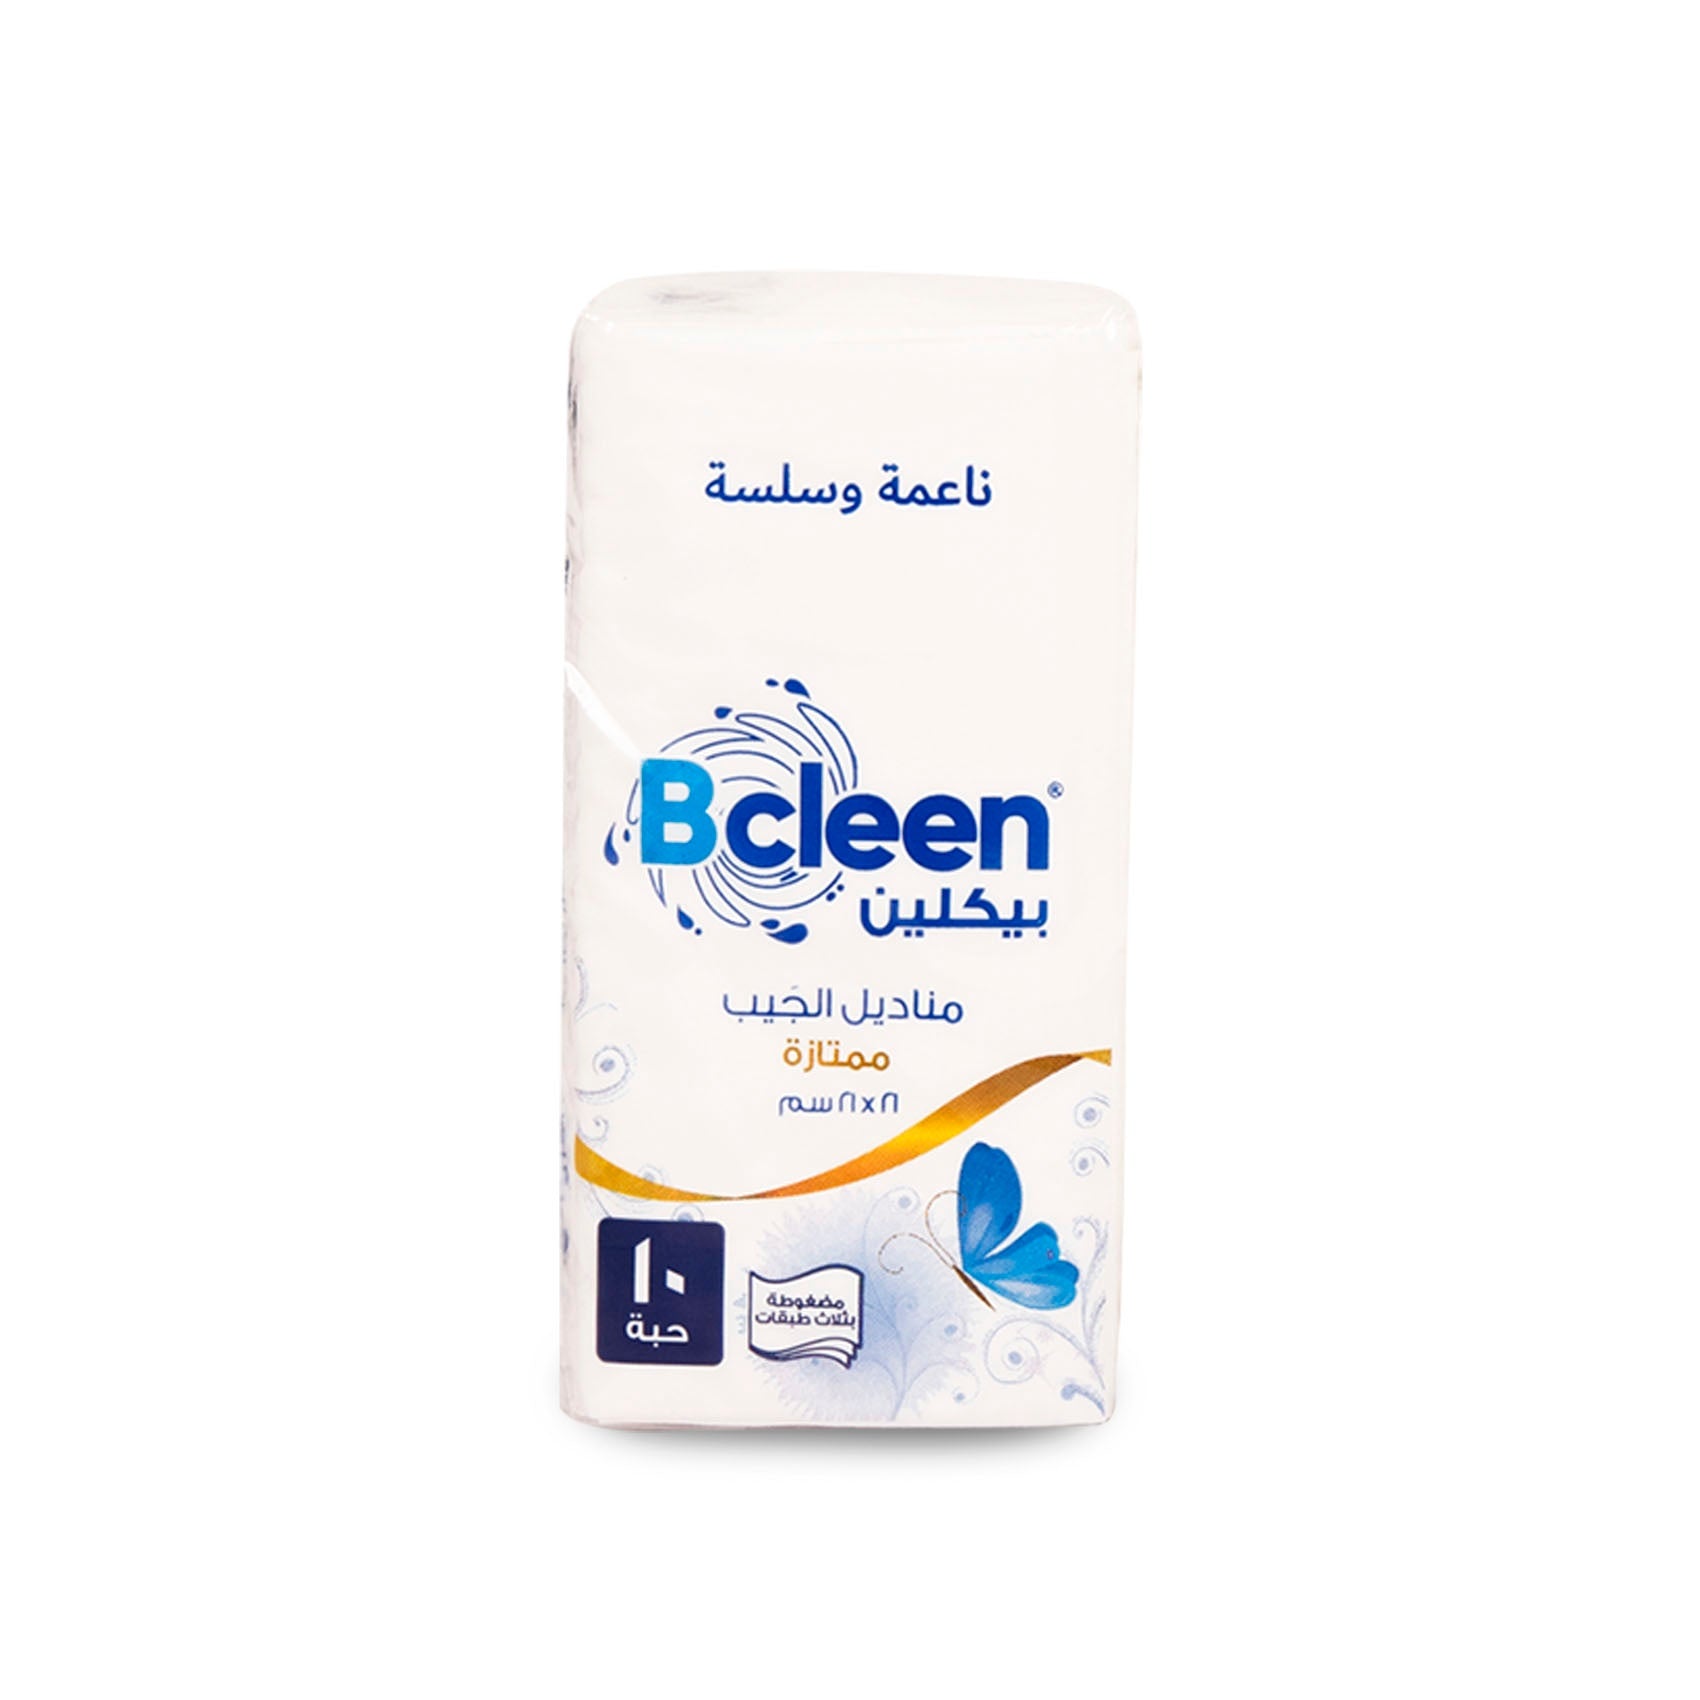 Bcleen® 3-Ply White Pocket Facial Tissue 10 Tissues